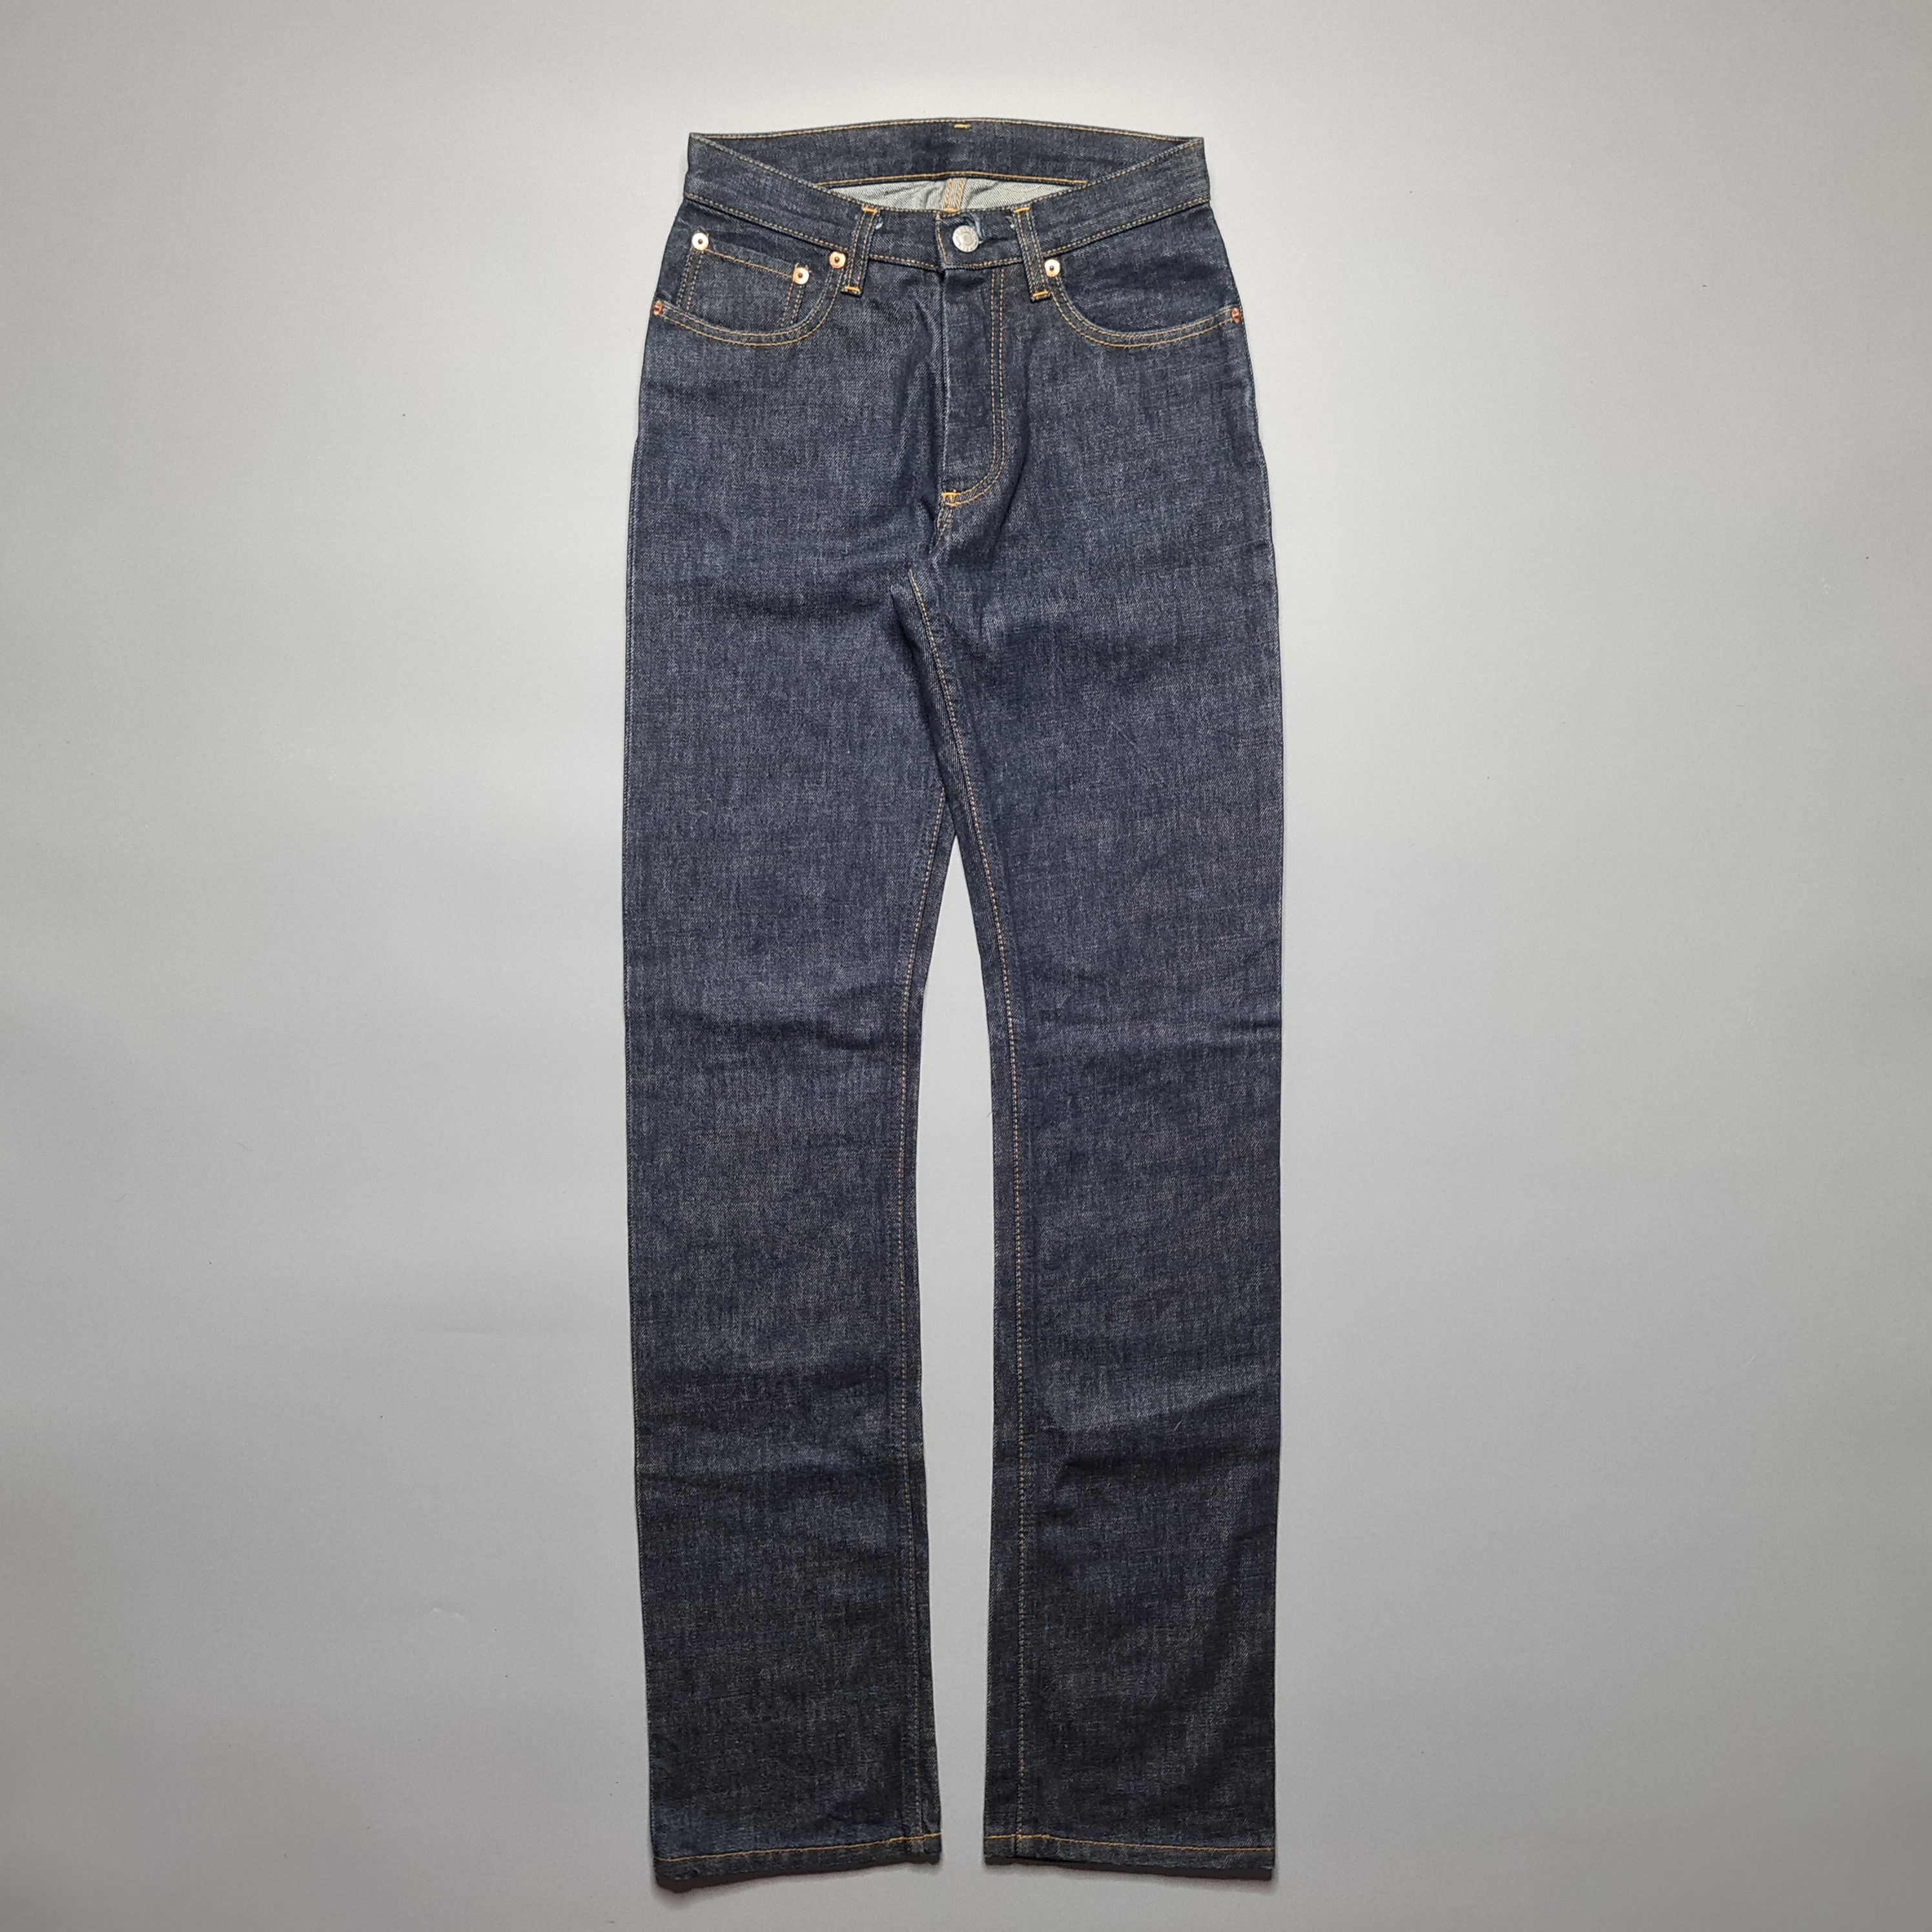 Helmut Lang - SS98 Classic 5-Pocket Jeans - 2